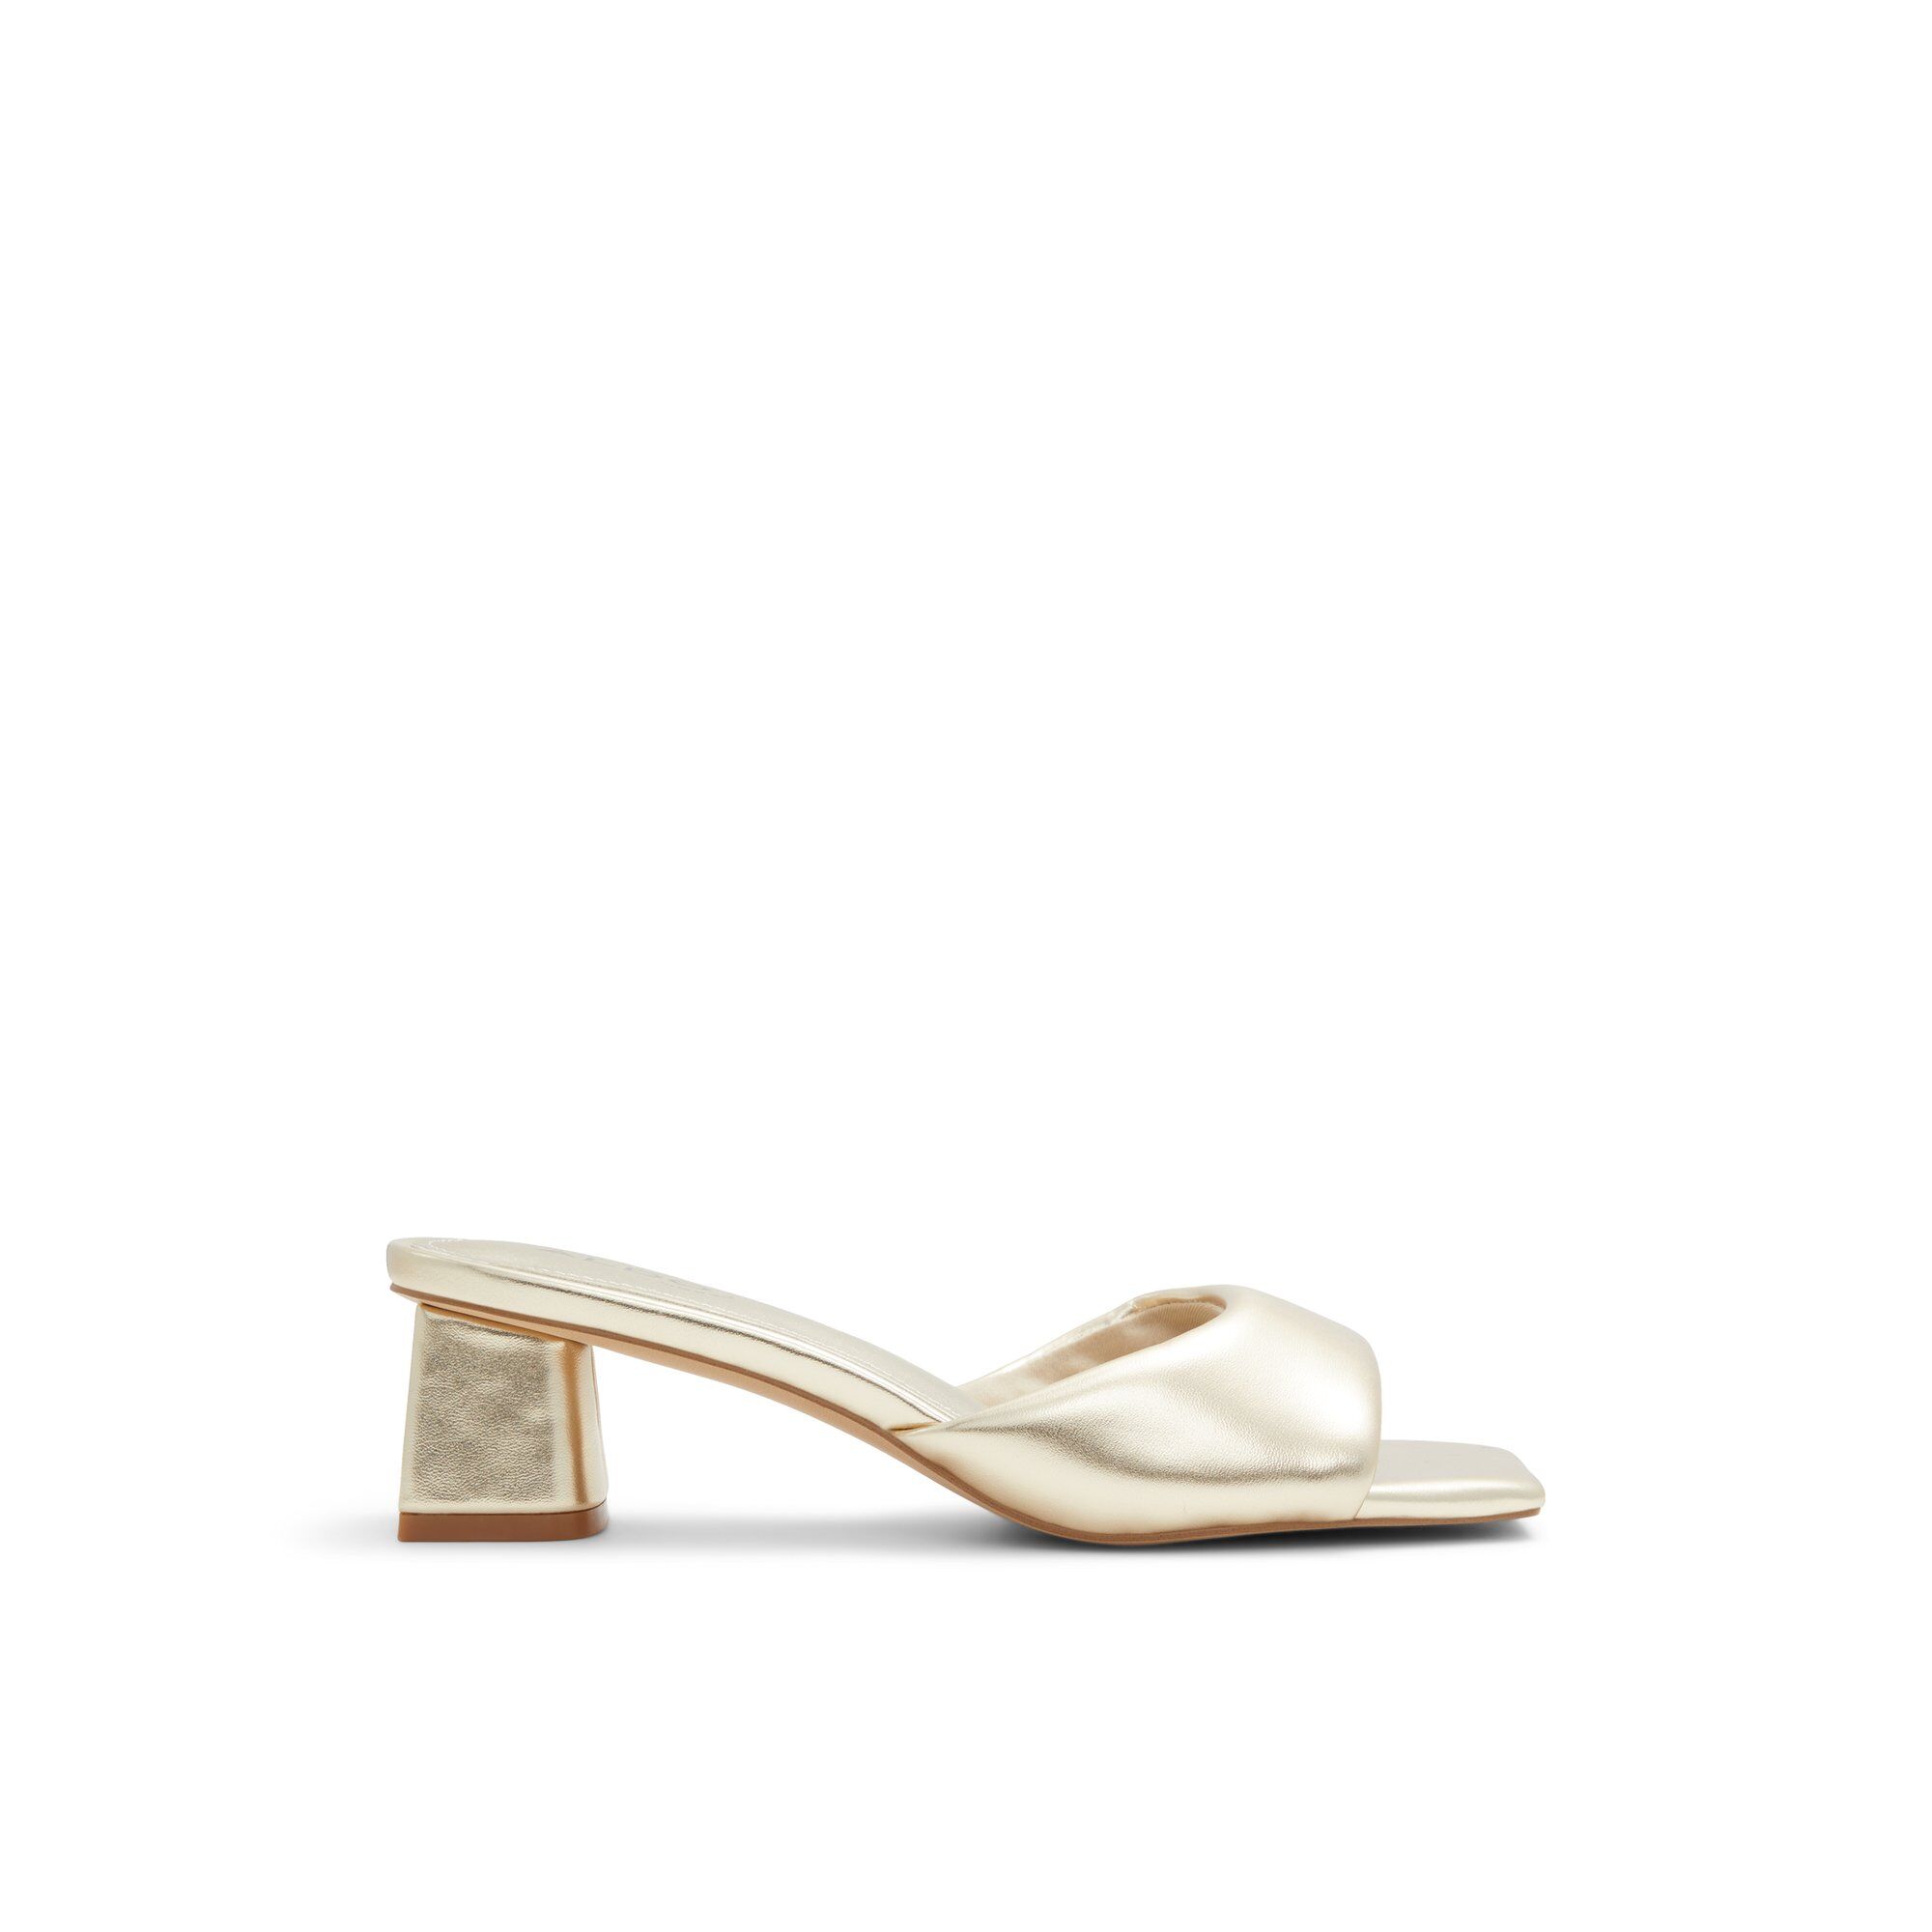 ALDO Aneka - Women's Heeled Mules Sandals - Gold, Size 11